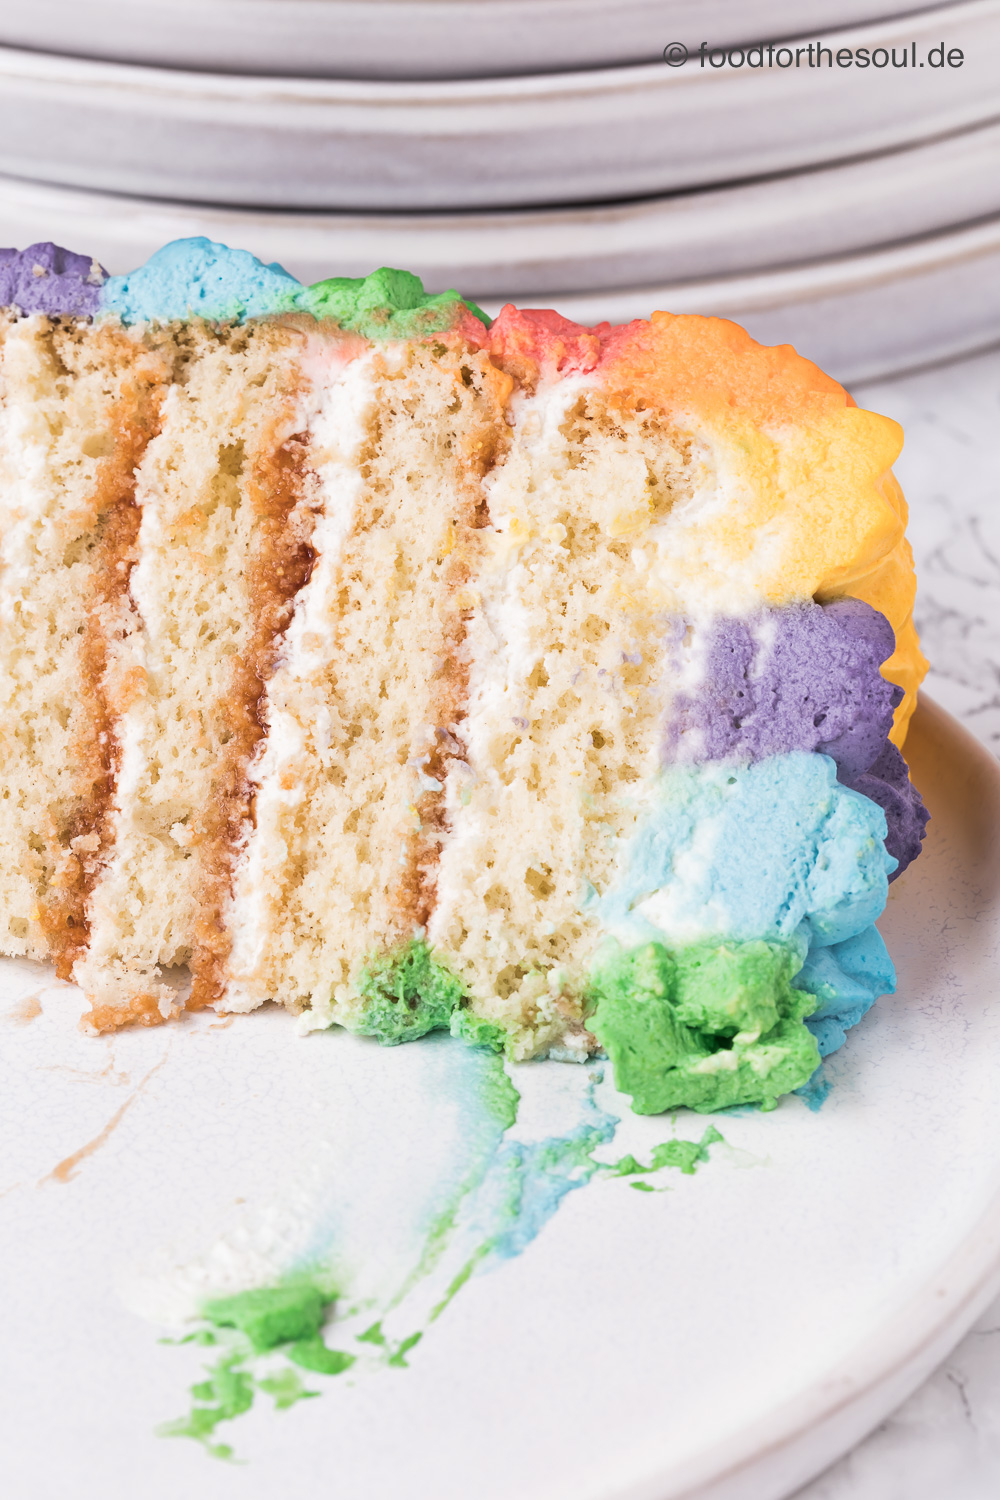 Cake Smash Torte in Regenbogenfarben #cake #smash #torte #regenbogentorte #regenbogen #rezept #geburtstag #kindergeburtstag #cakesmash #fotoshooting #fotografie #baby #kinder #geburtstagstorte